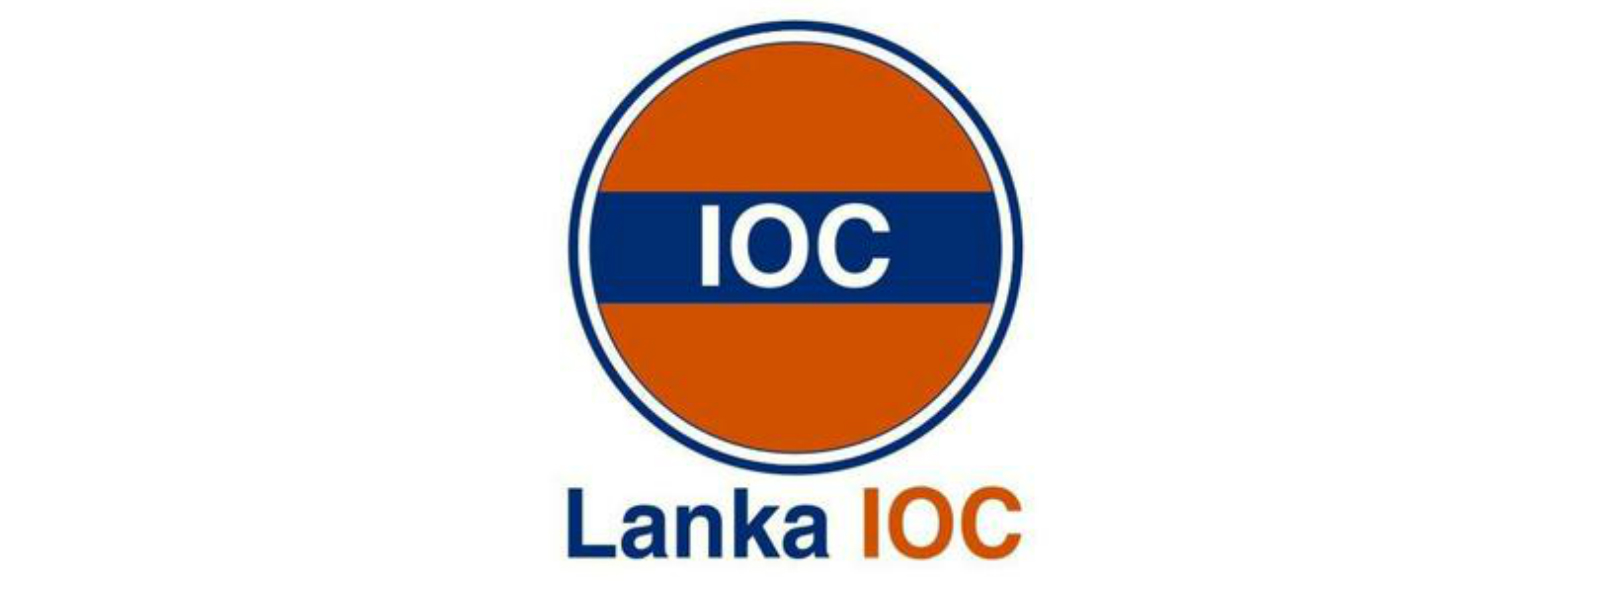 Lanka IOC increases fuel prices